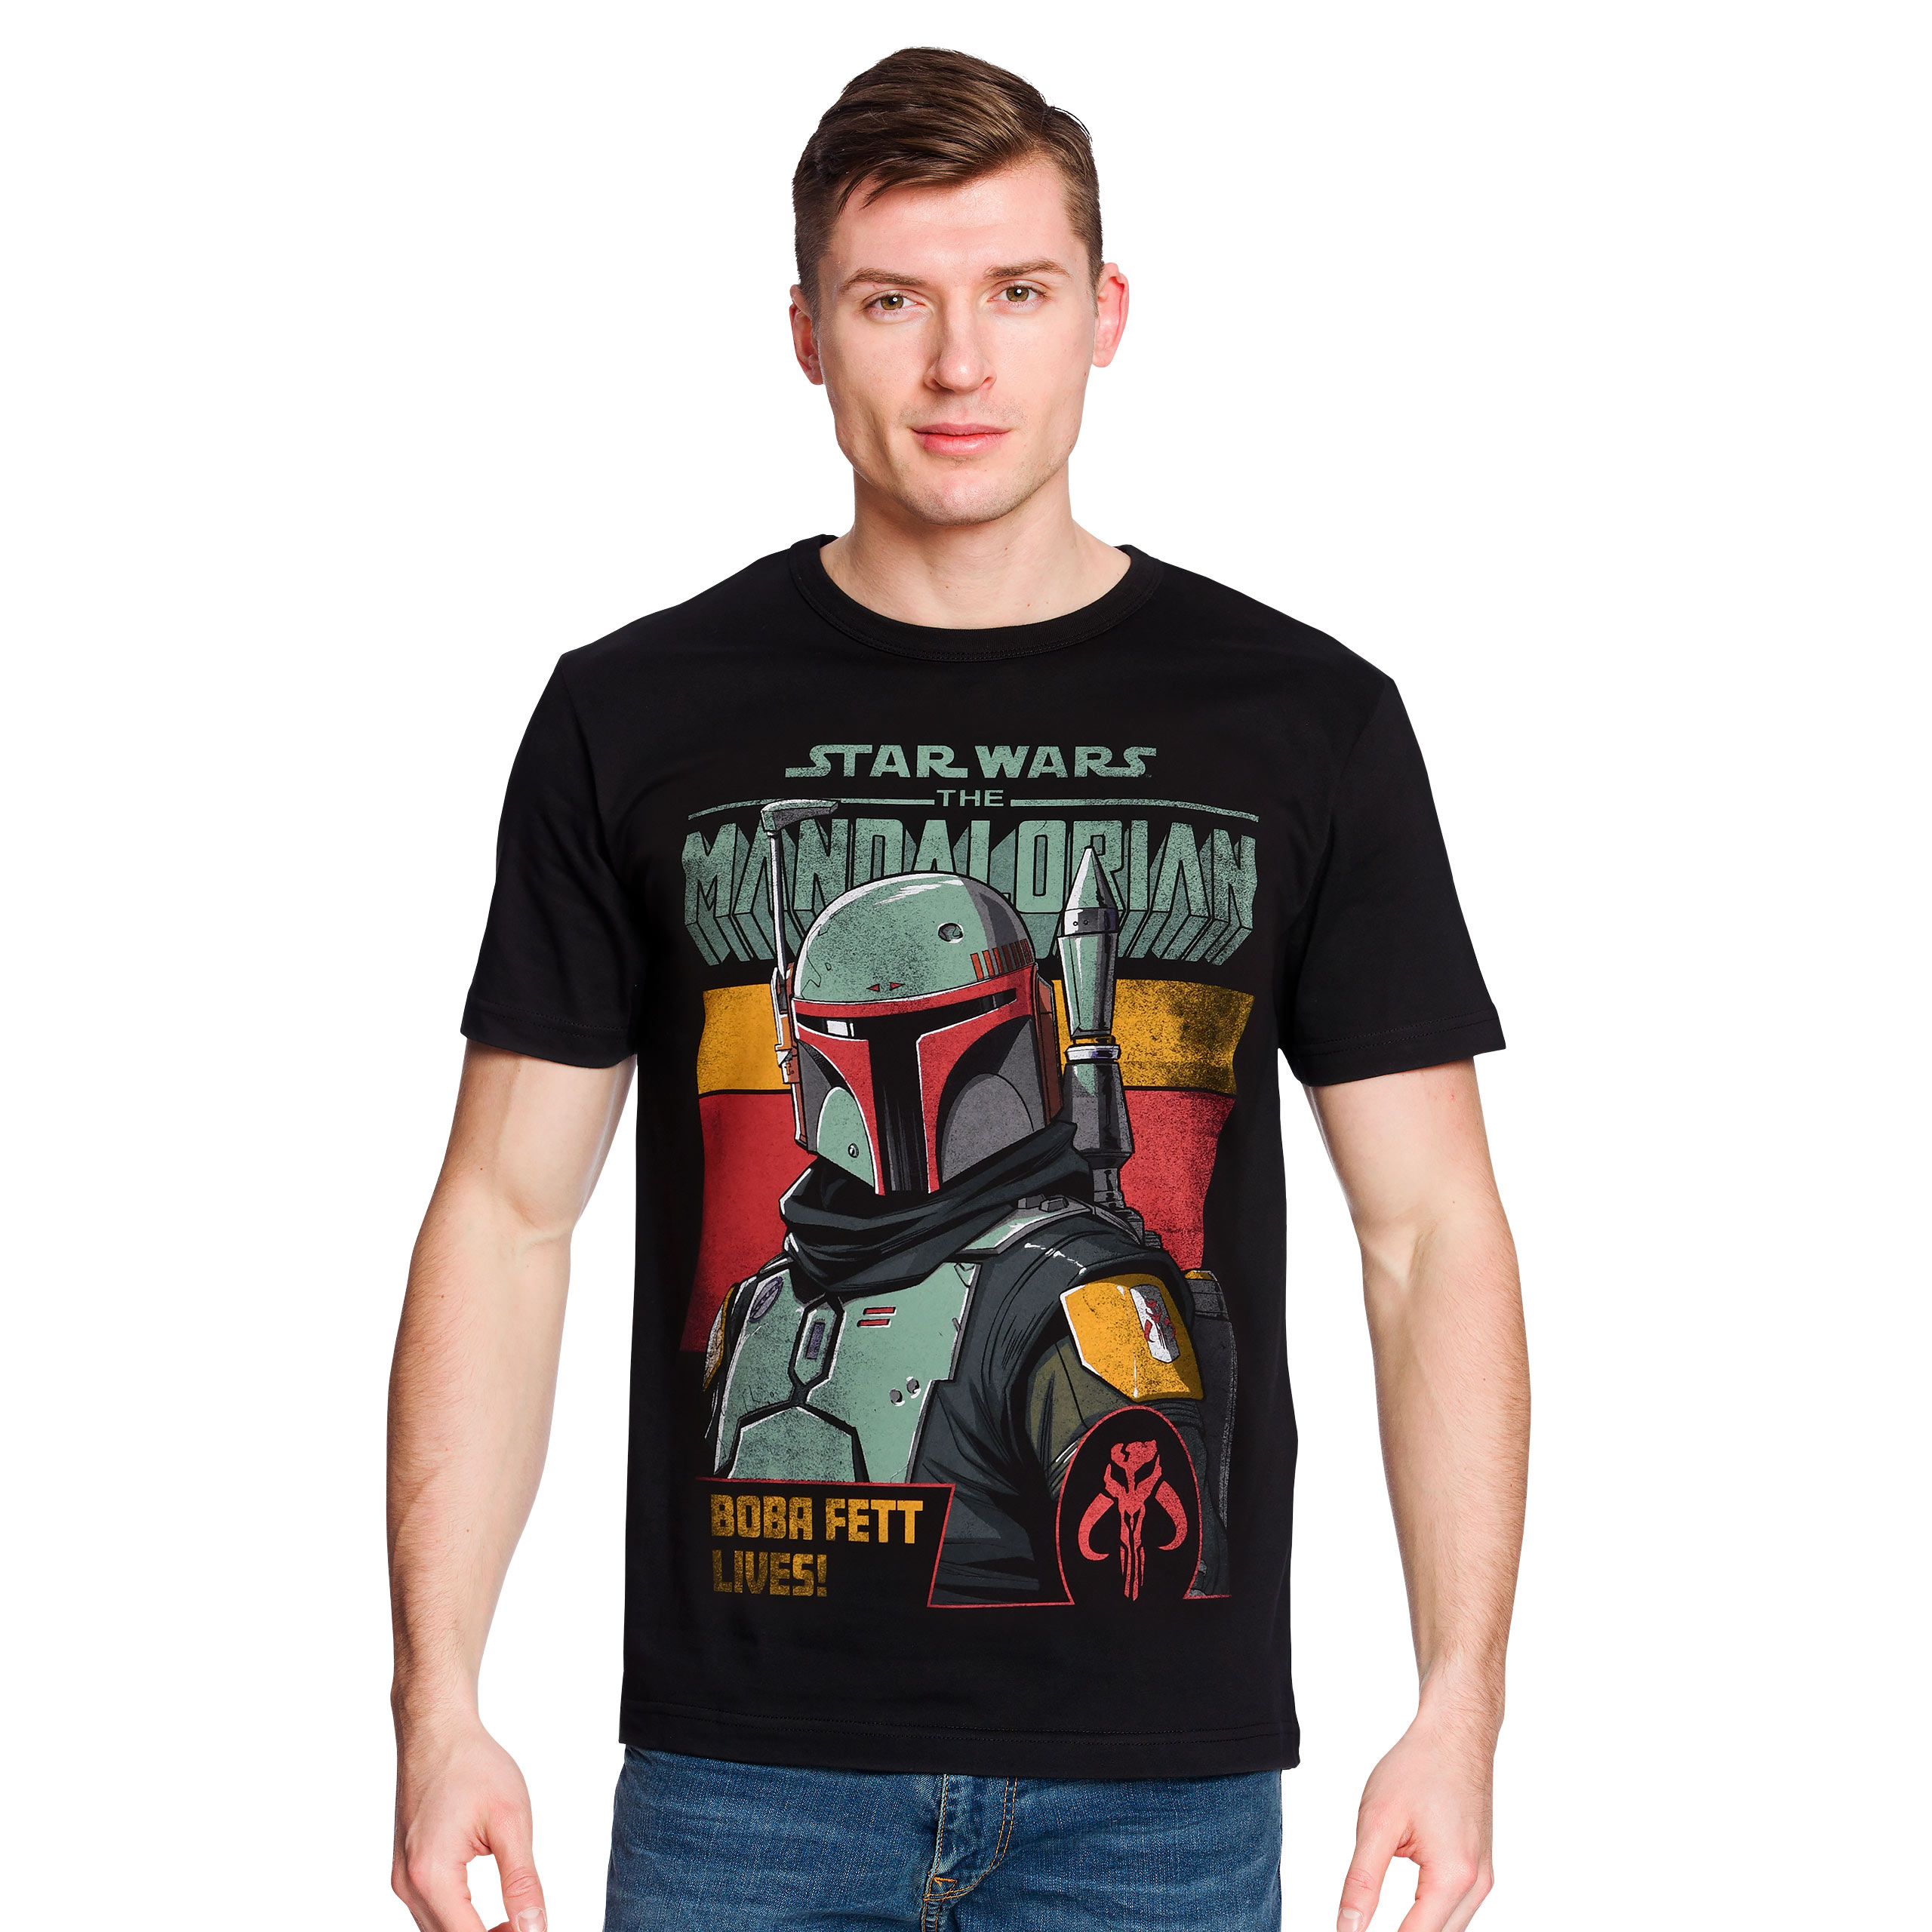 Boba Fett Lives T-Shirt schwarz - Star Wars Mandalorian